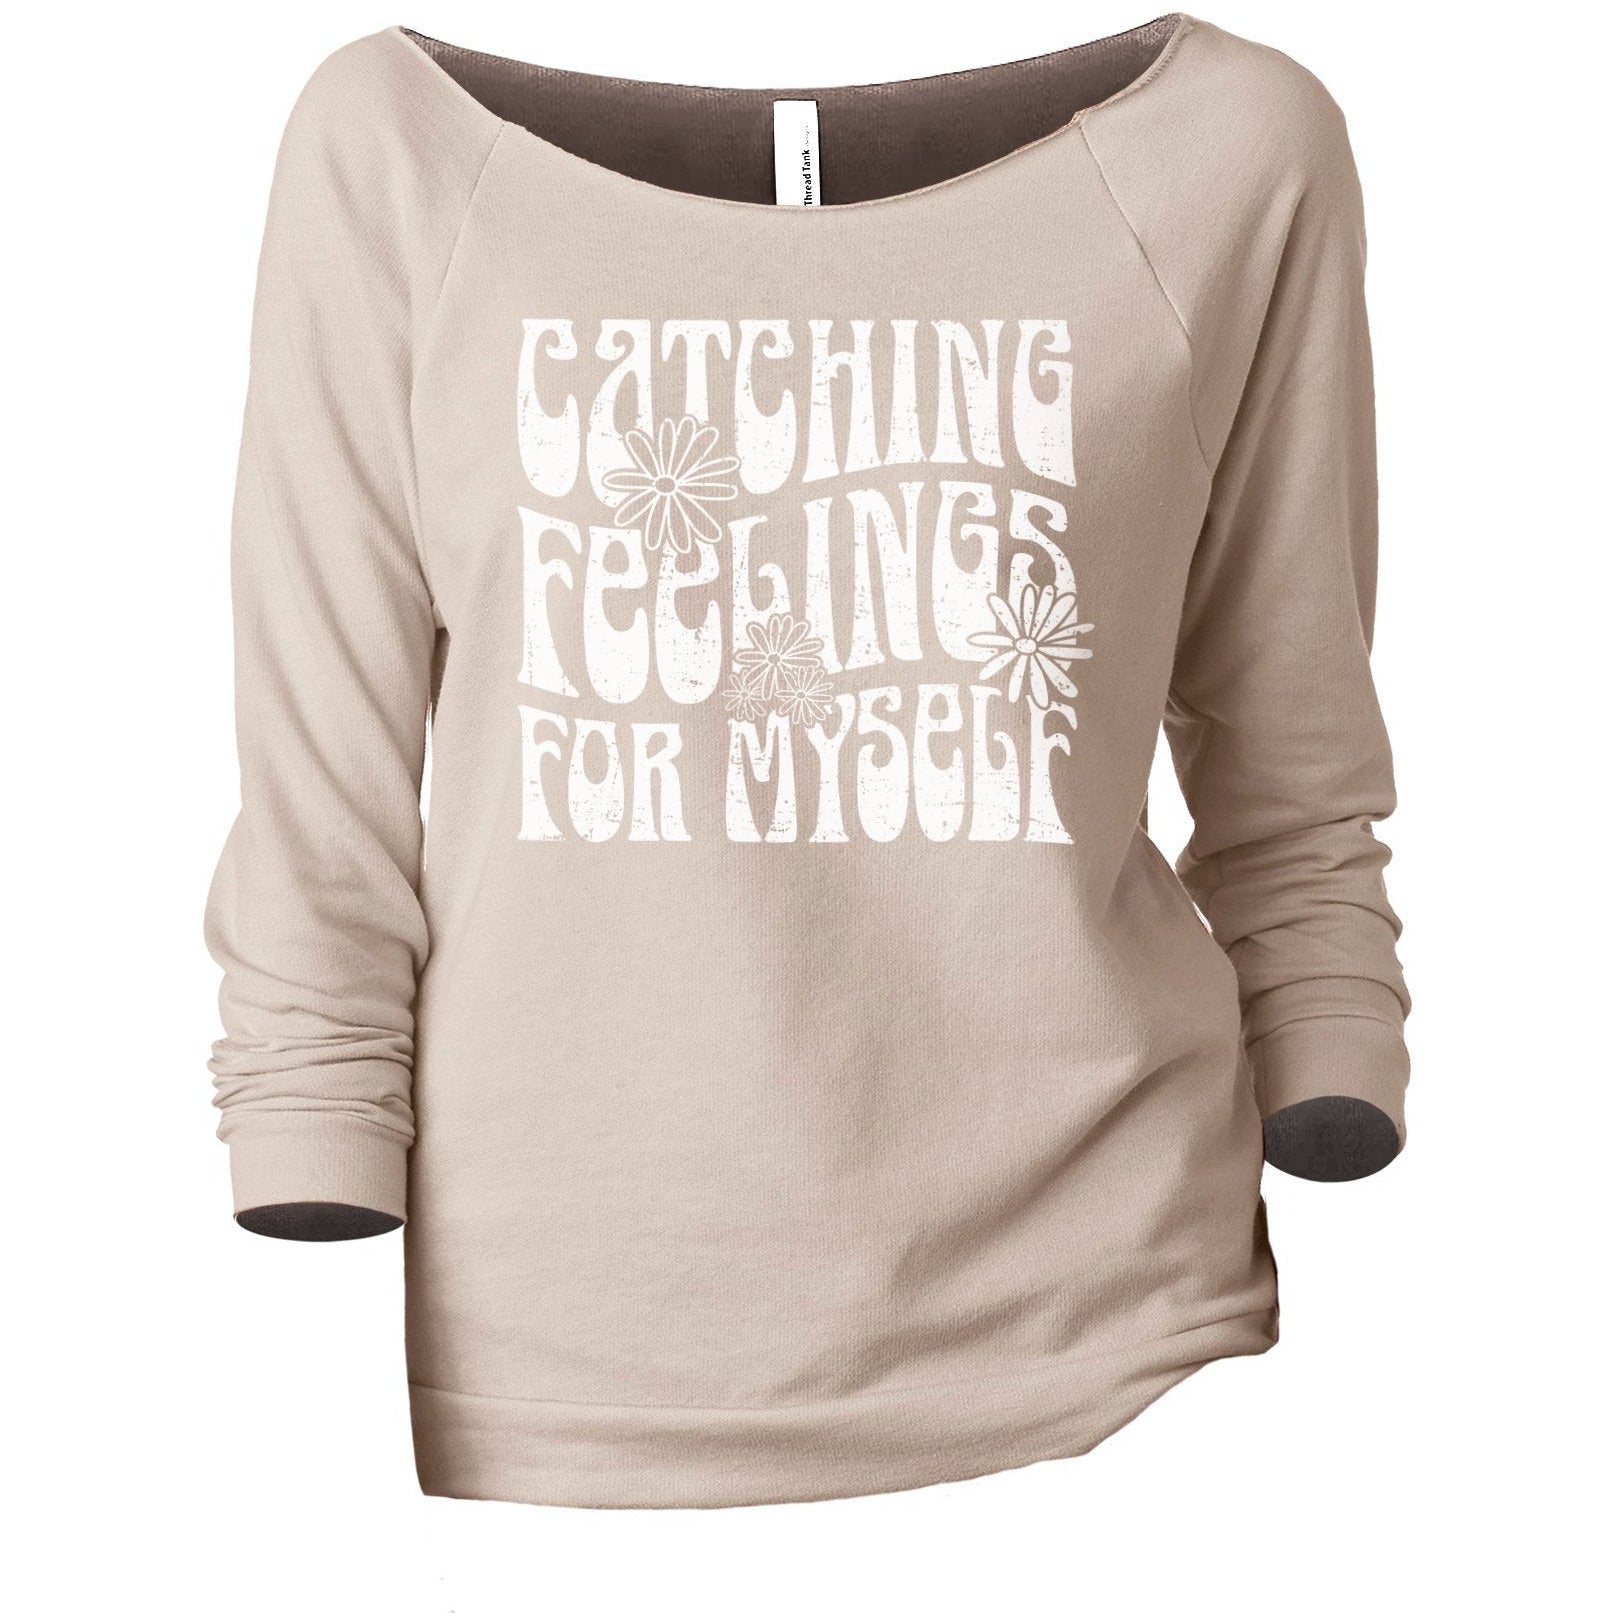 Catching Feelings For Myself Women's Graphic Printed Lightweight Slouchy 3/4 Sleeves Sweatshirt Dust